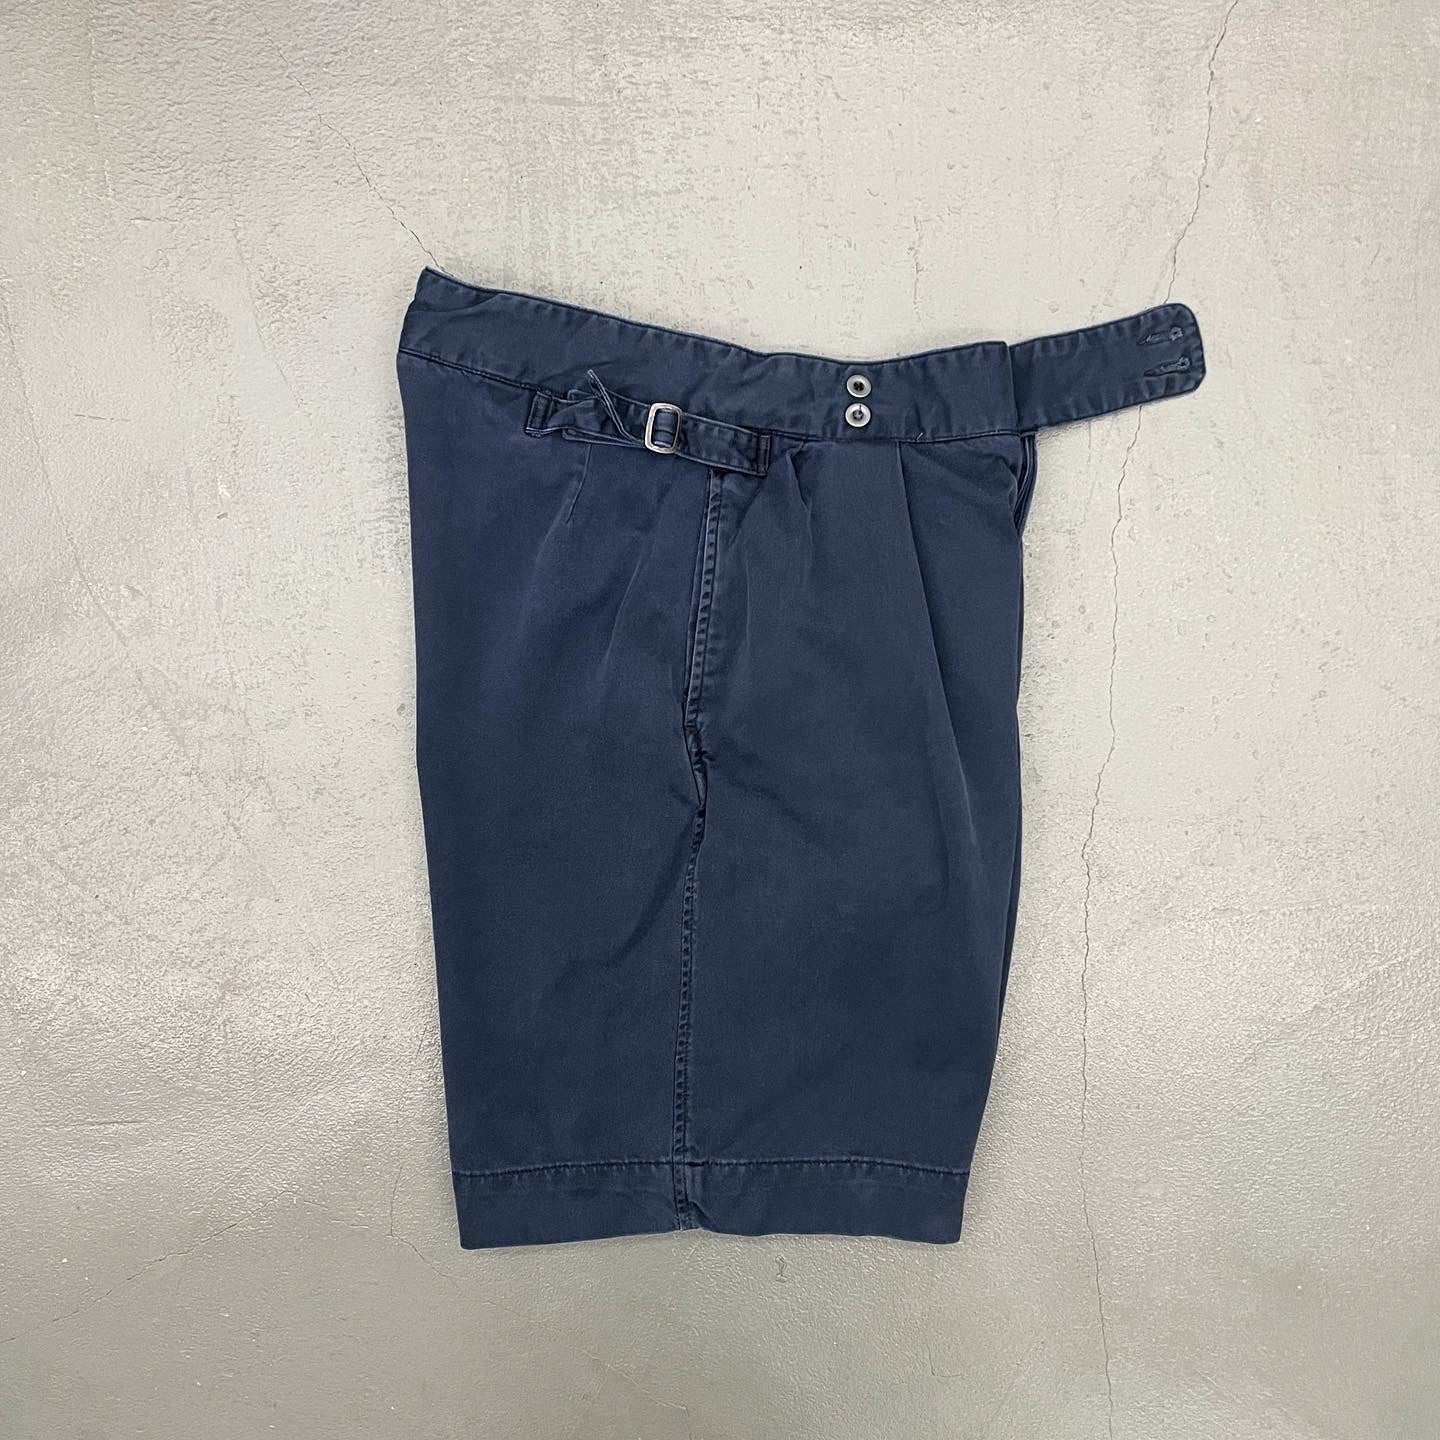 Polo by Ralph Lauren Vintage Pleats Shorts